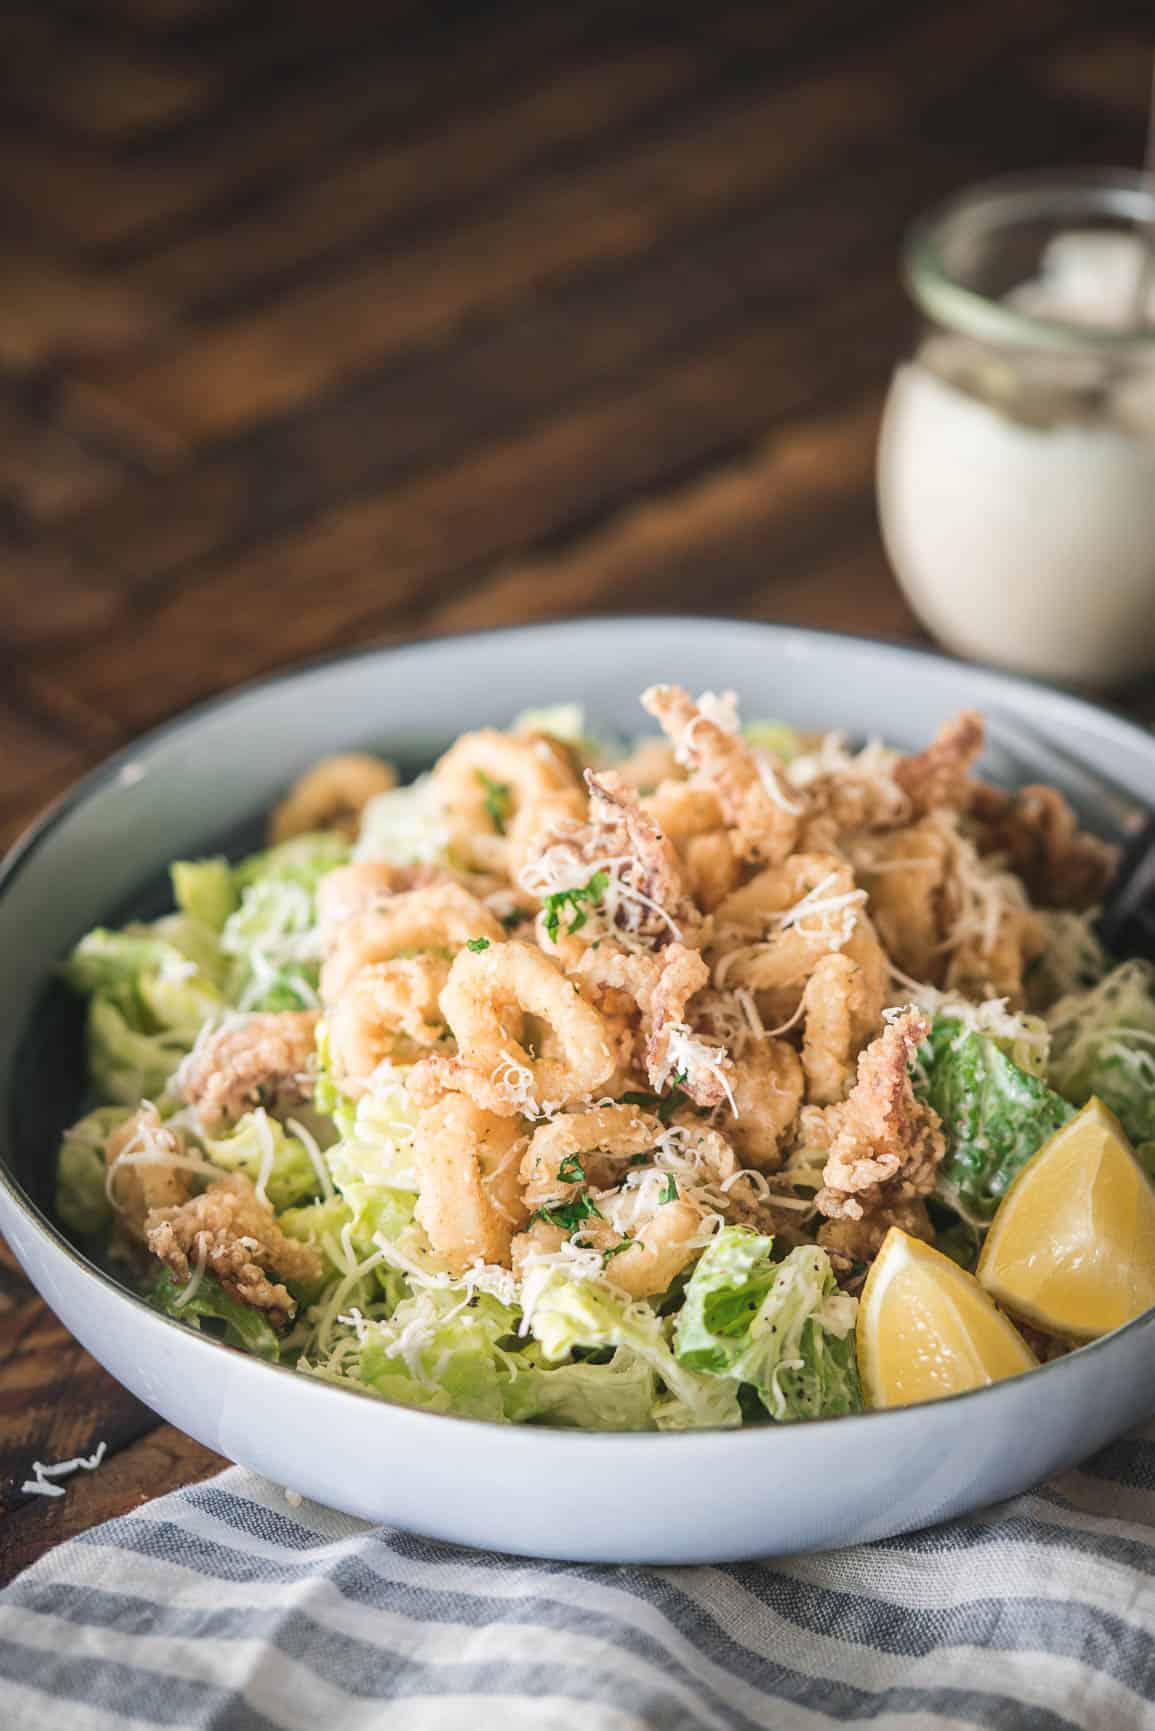 Calamari Caesar Salad {Grain-Free & Gluten-Free}